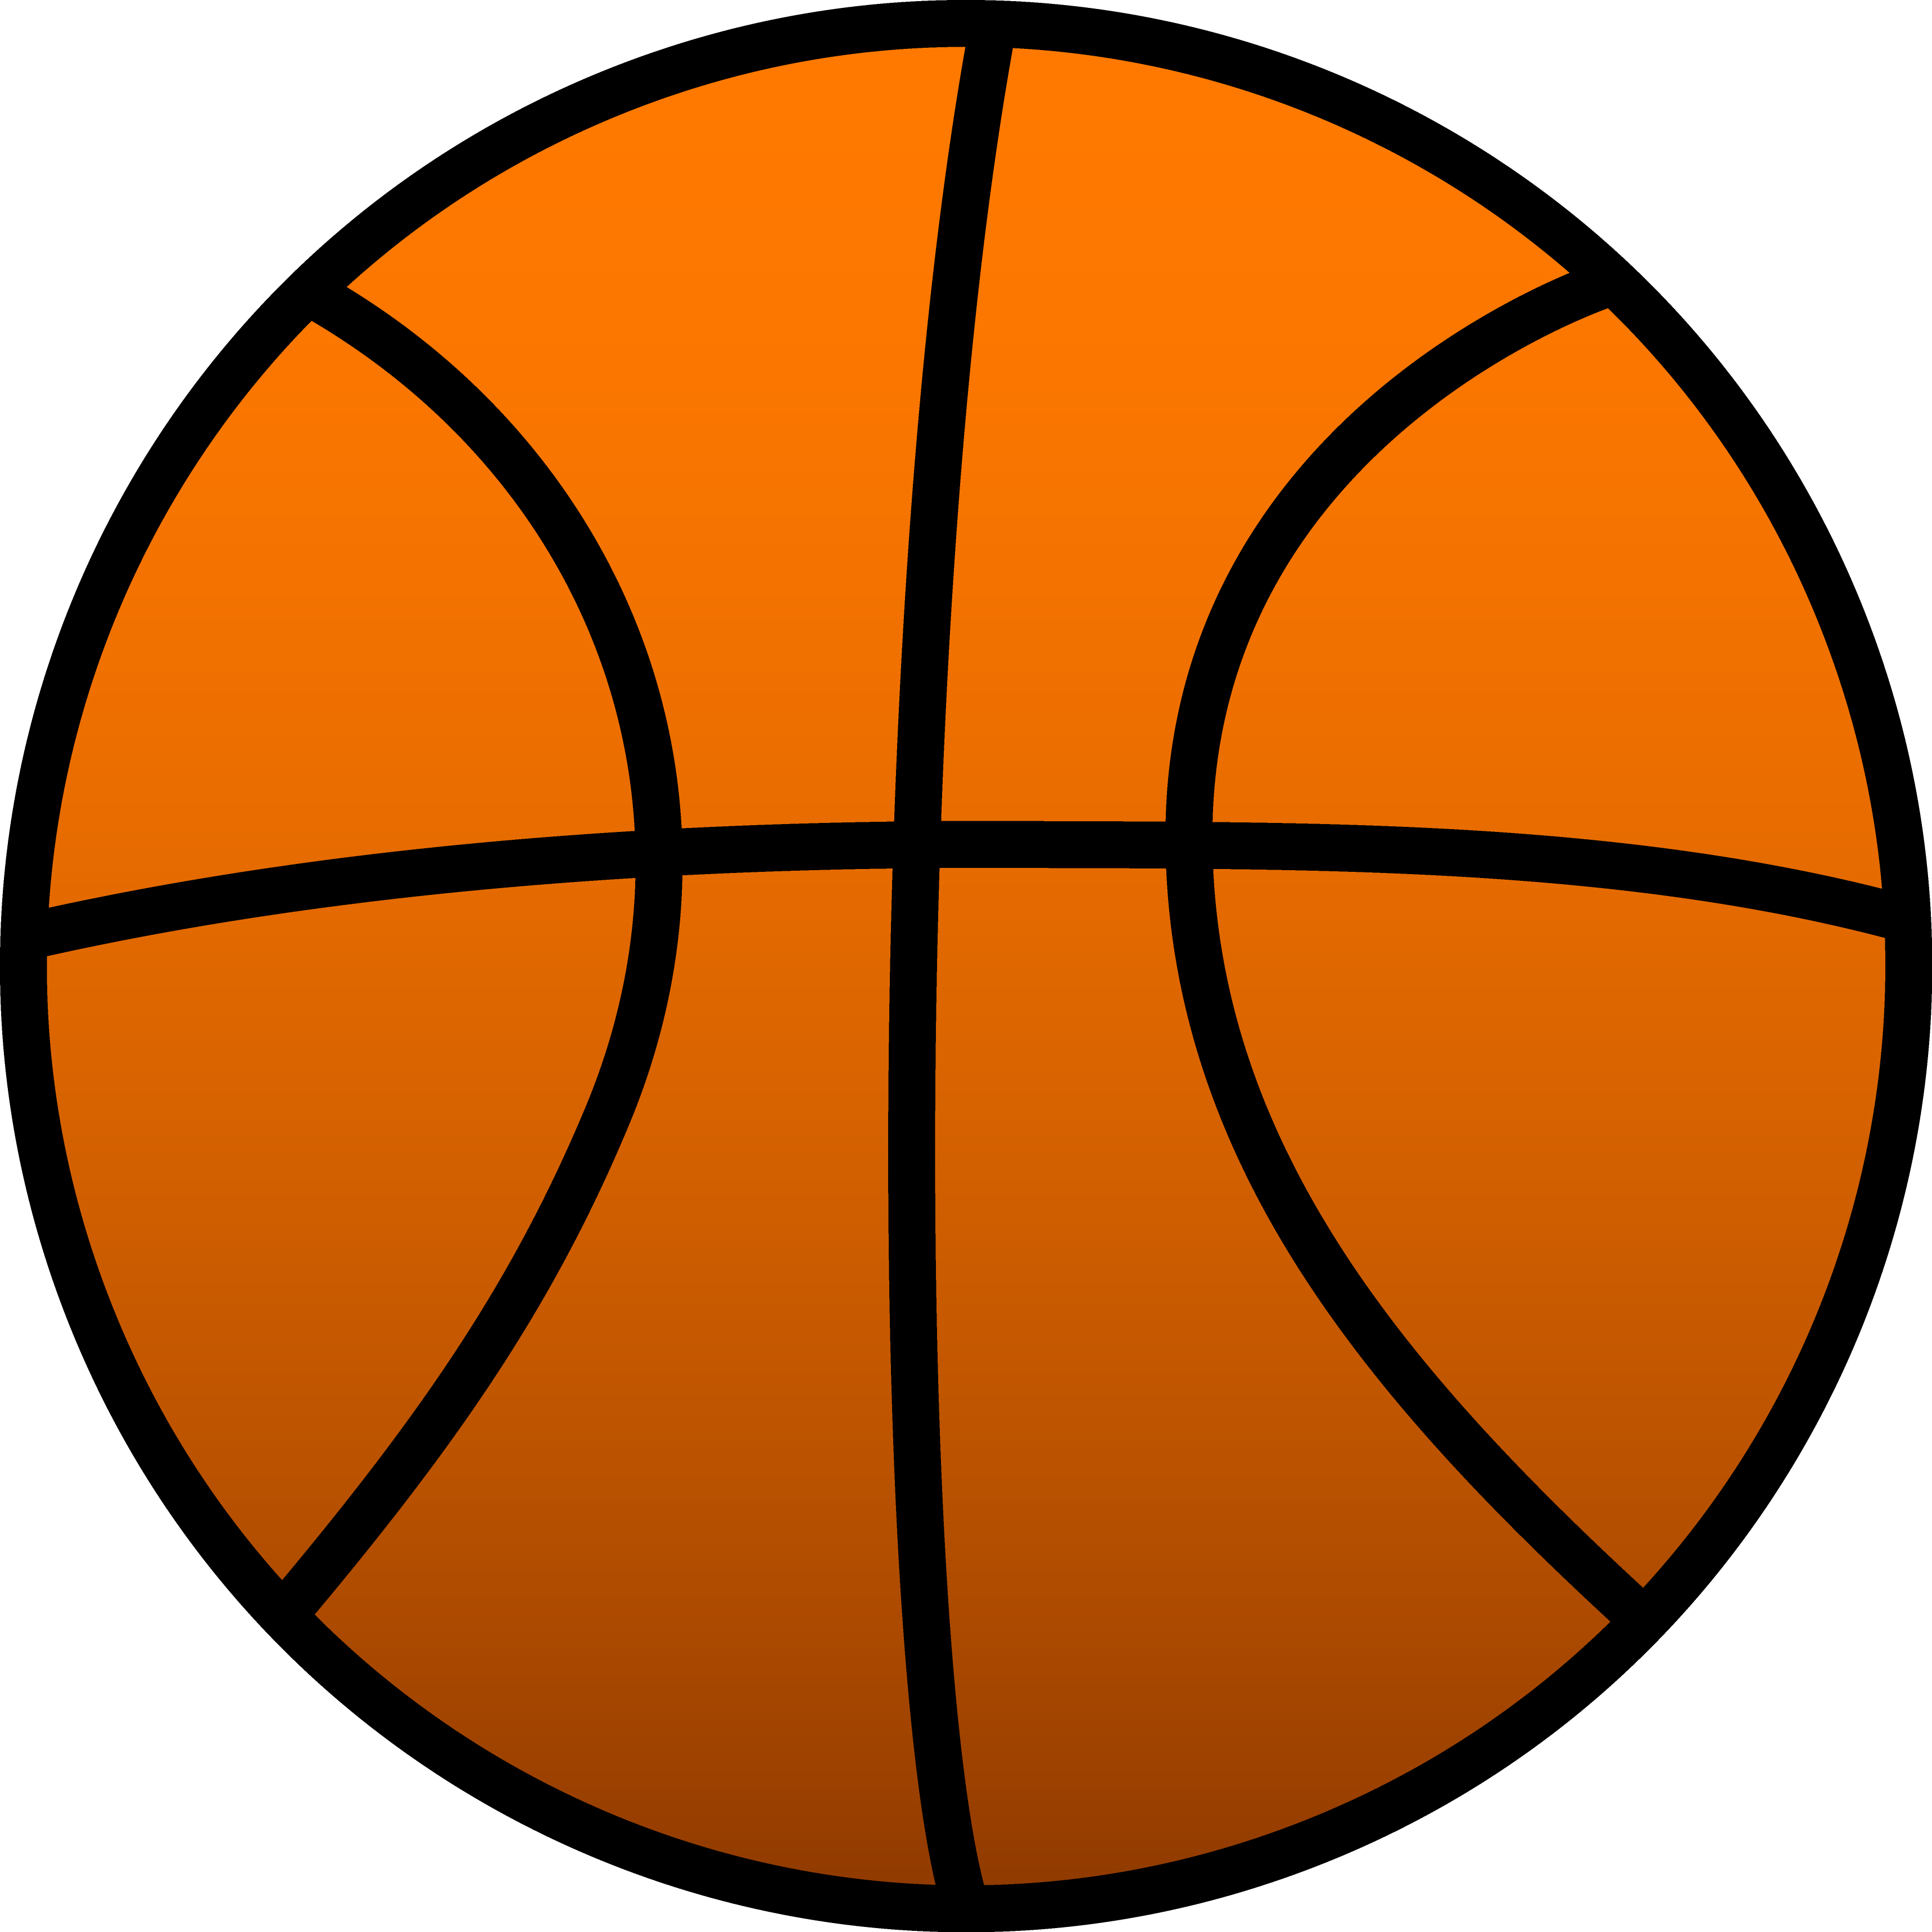 Basketball ball PNG image, free download